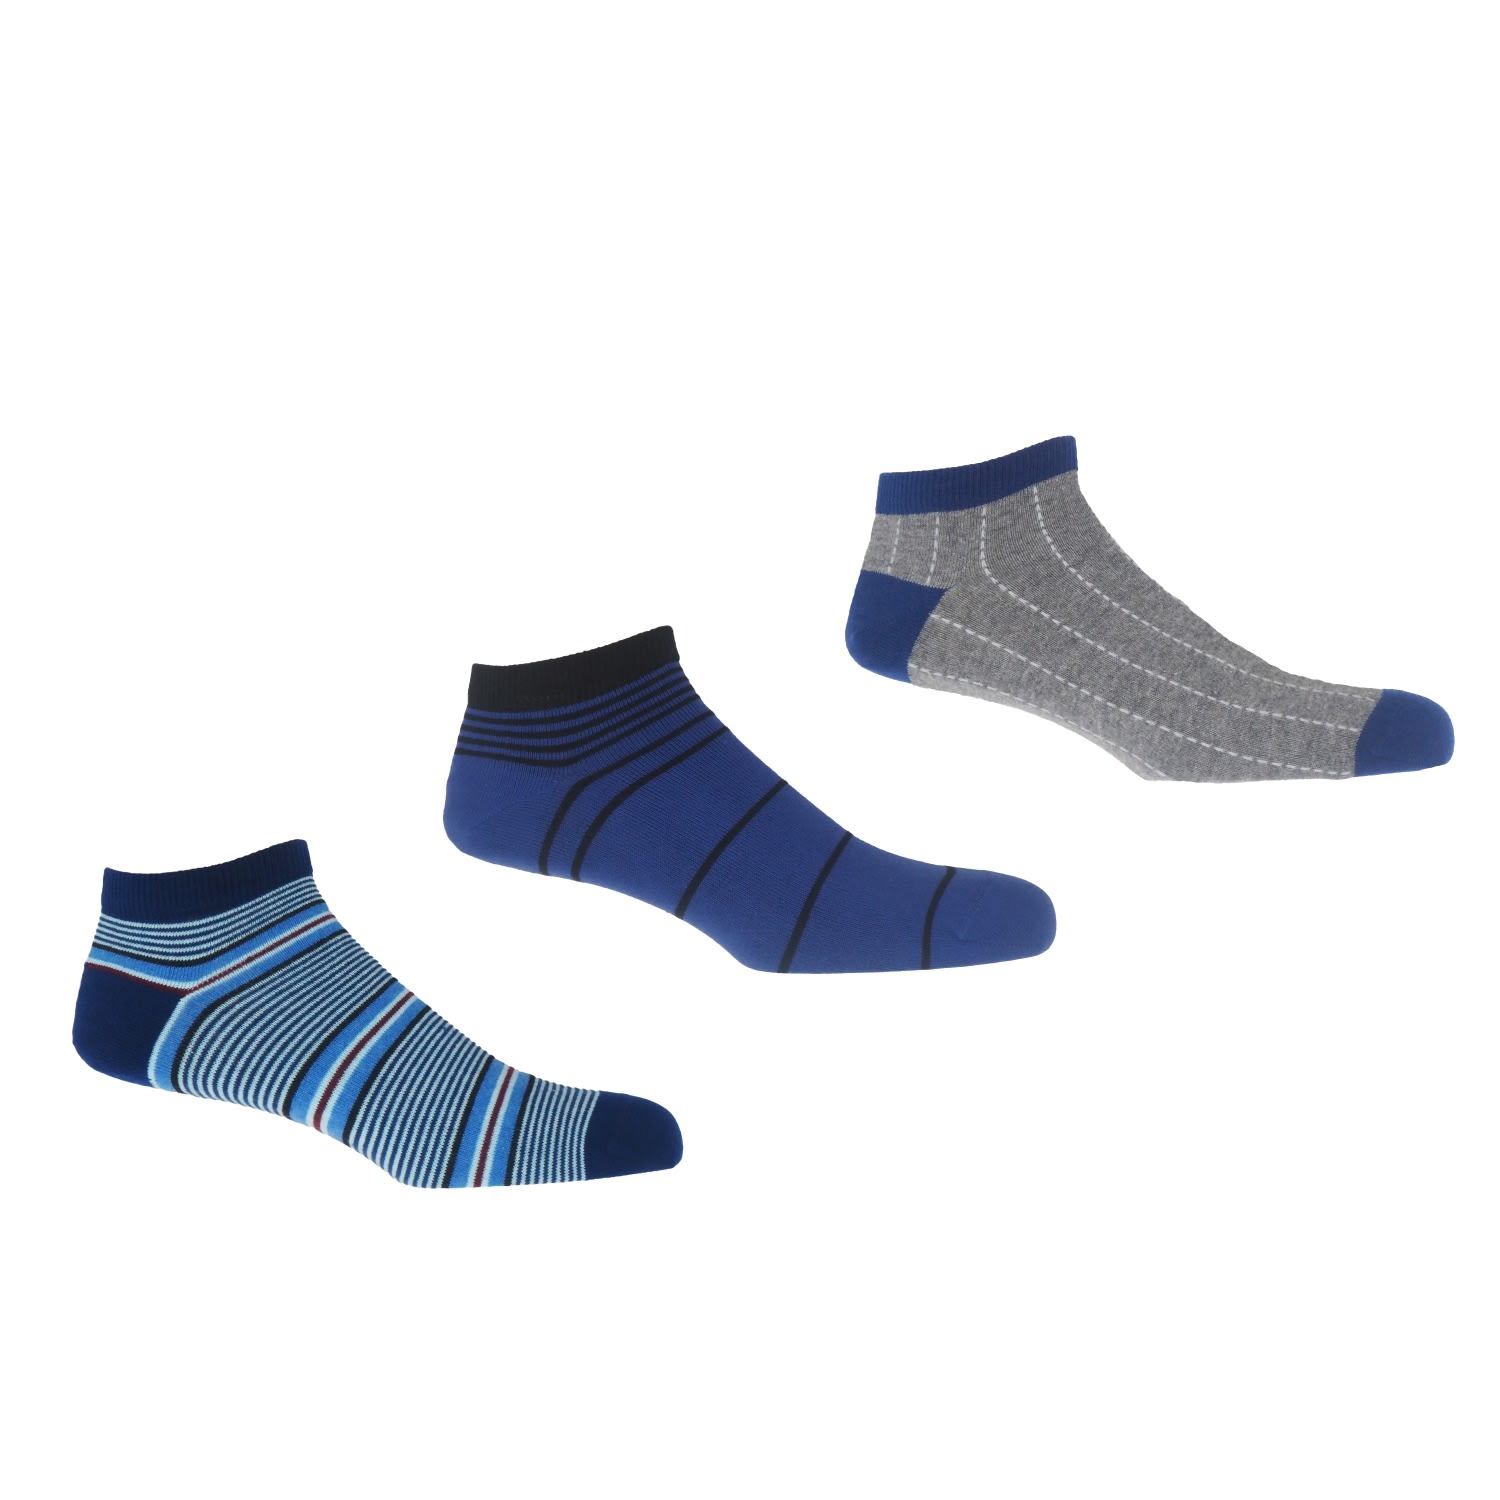 Men’s Trainer Socks Bundle - Multistripe, Retro & Dash Peper Harow - Made in England